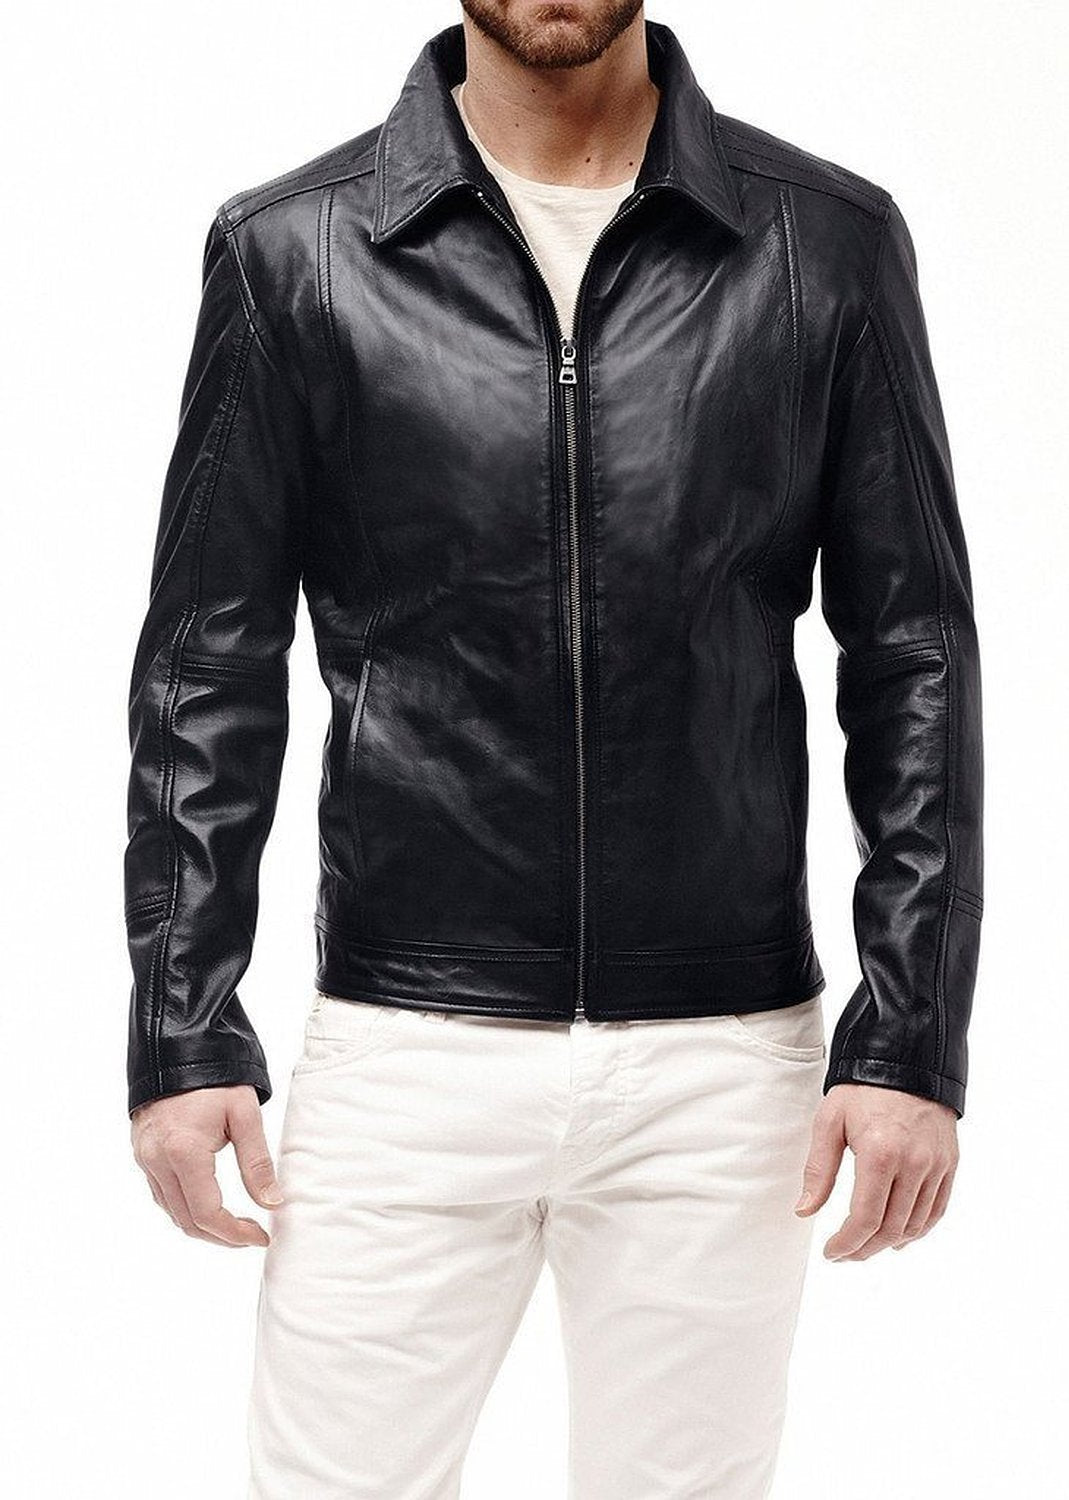 Leather Jackets Hub Mens Genuine Lambskin Leather Jacket (Black, Aviator Jacket) - 1501241